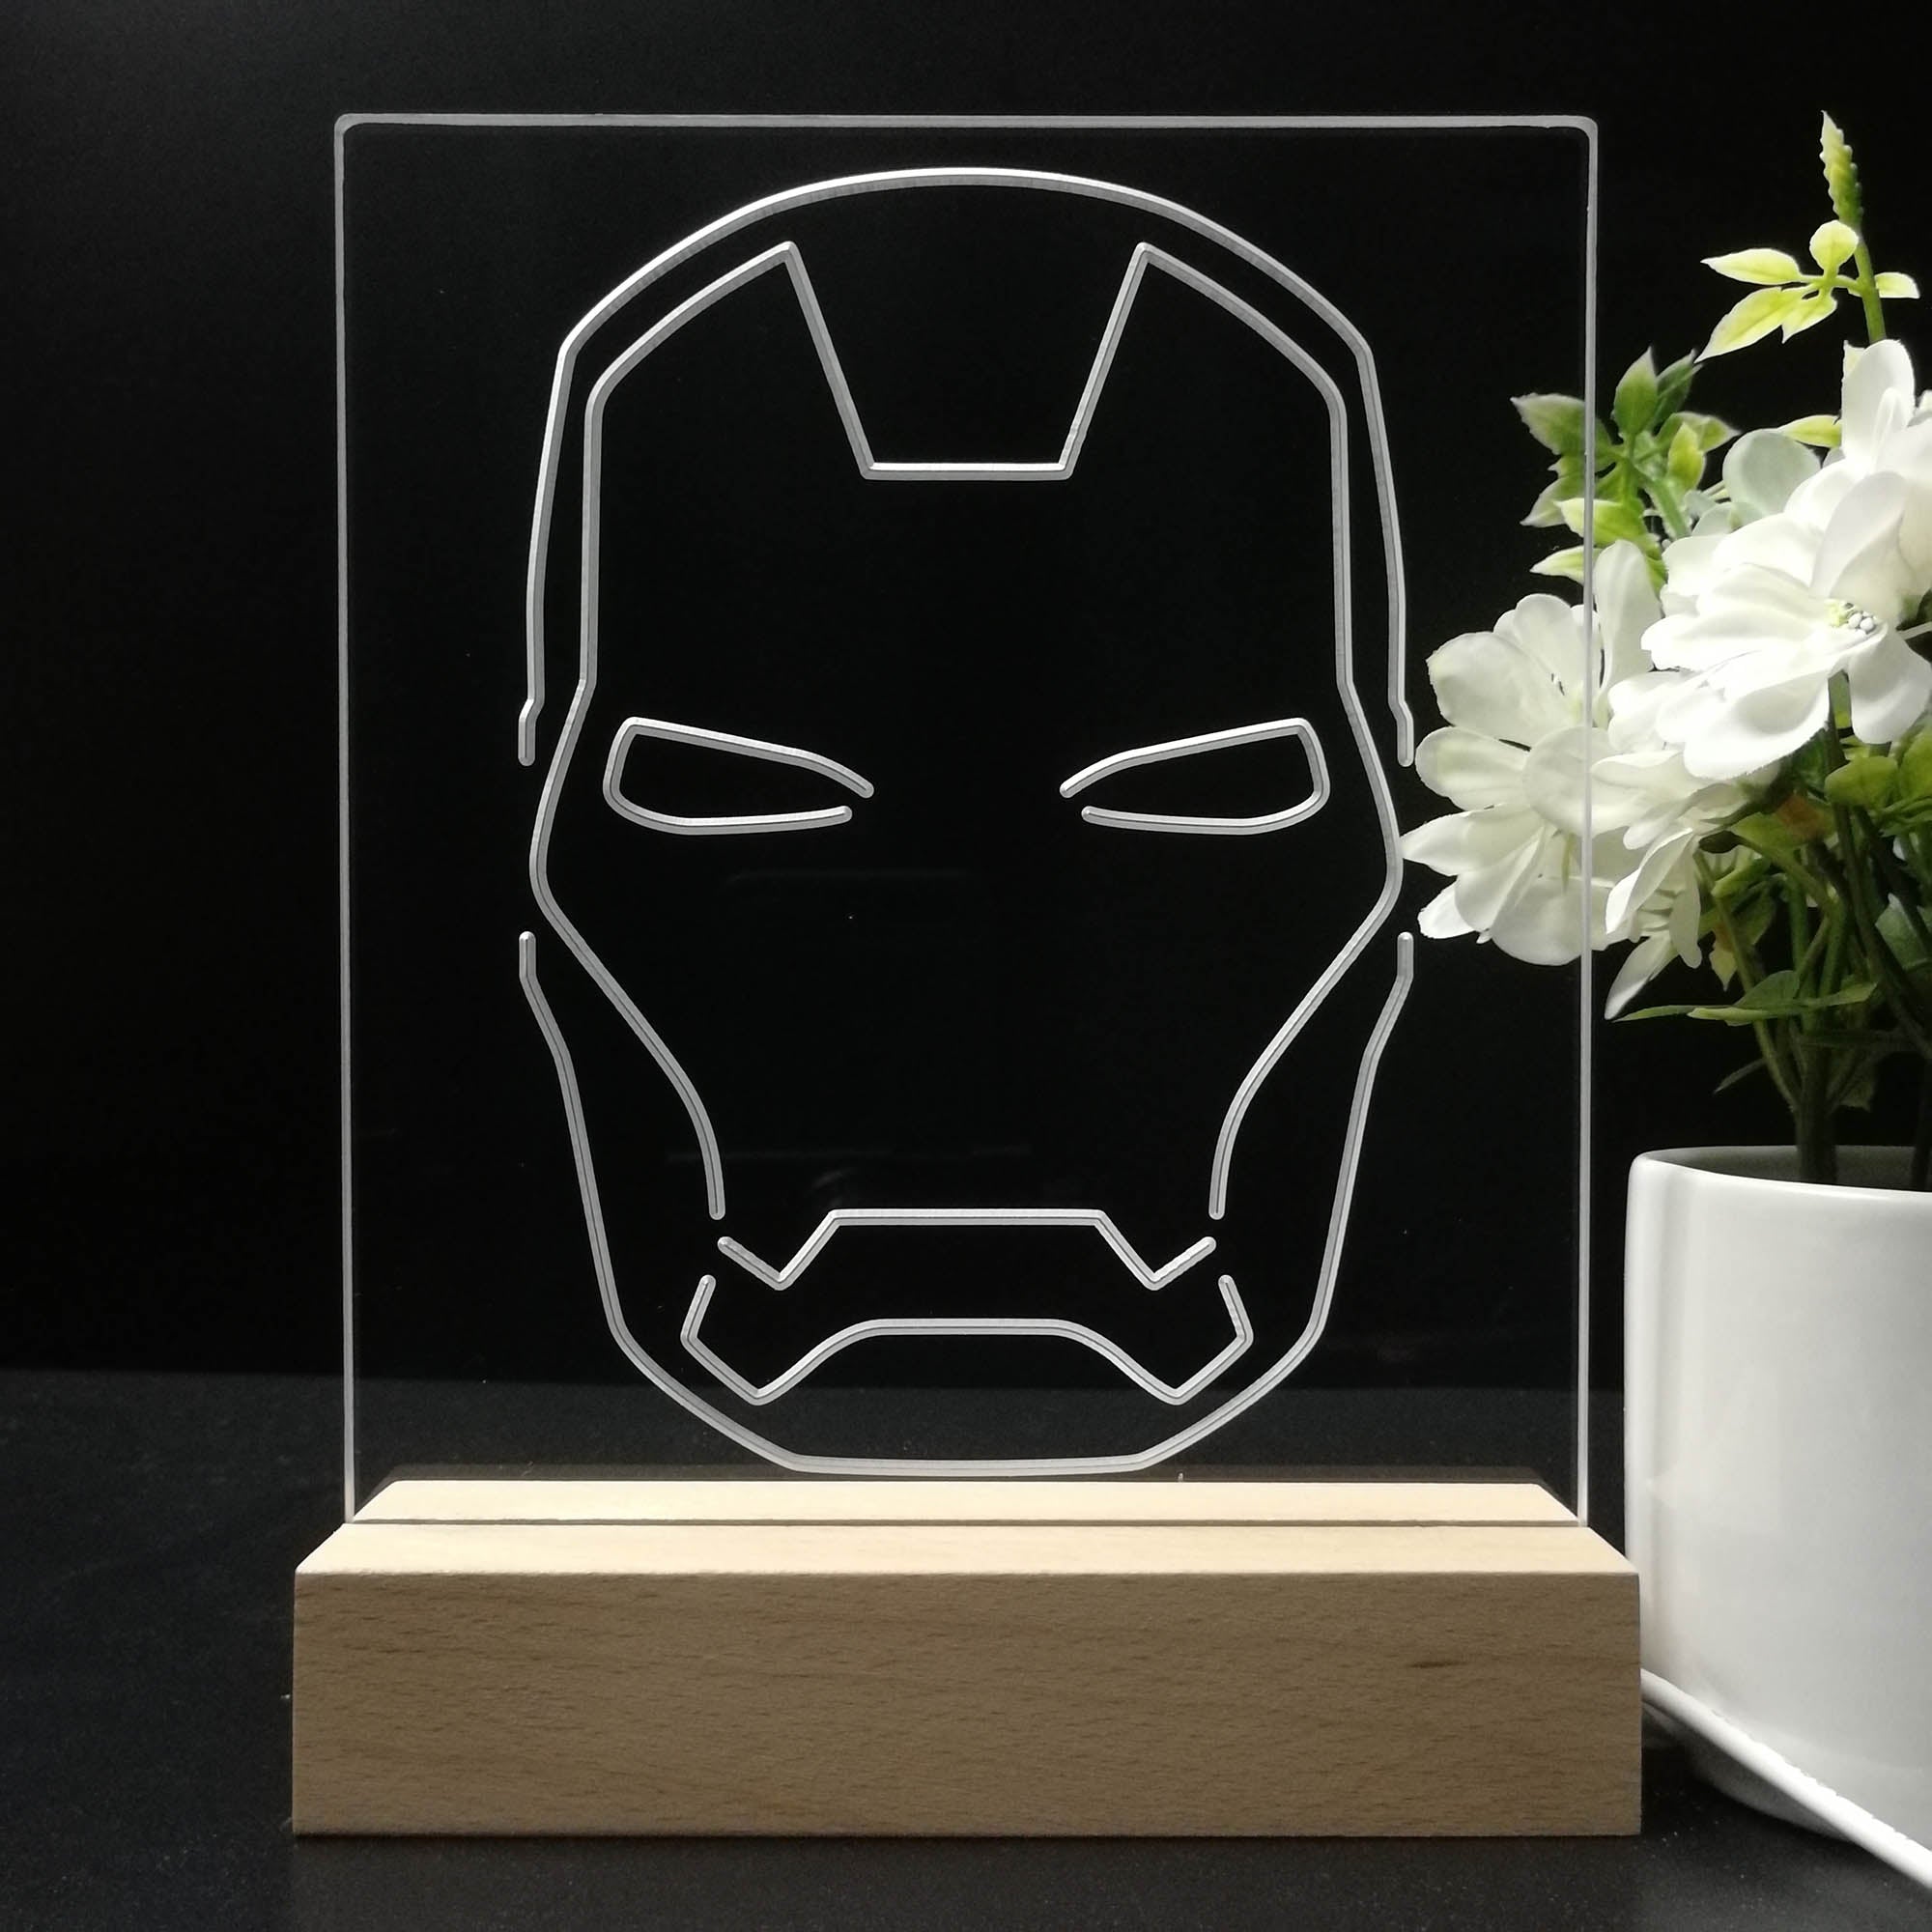 Iron Man Mask Marvels 3D Illusion Night Light Desk Lamp